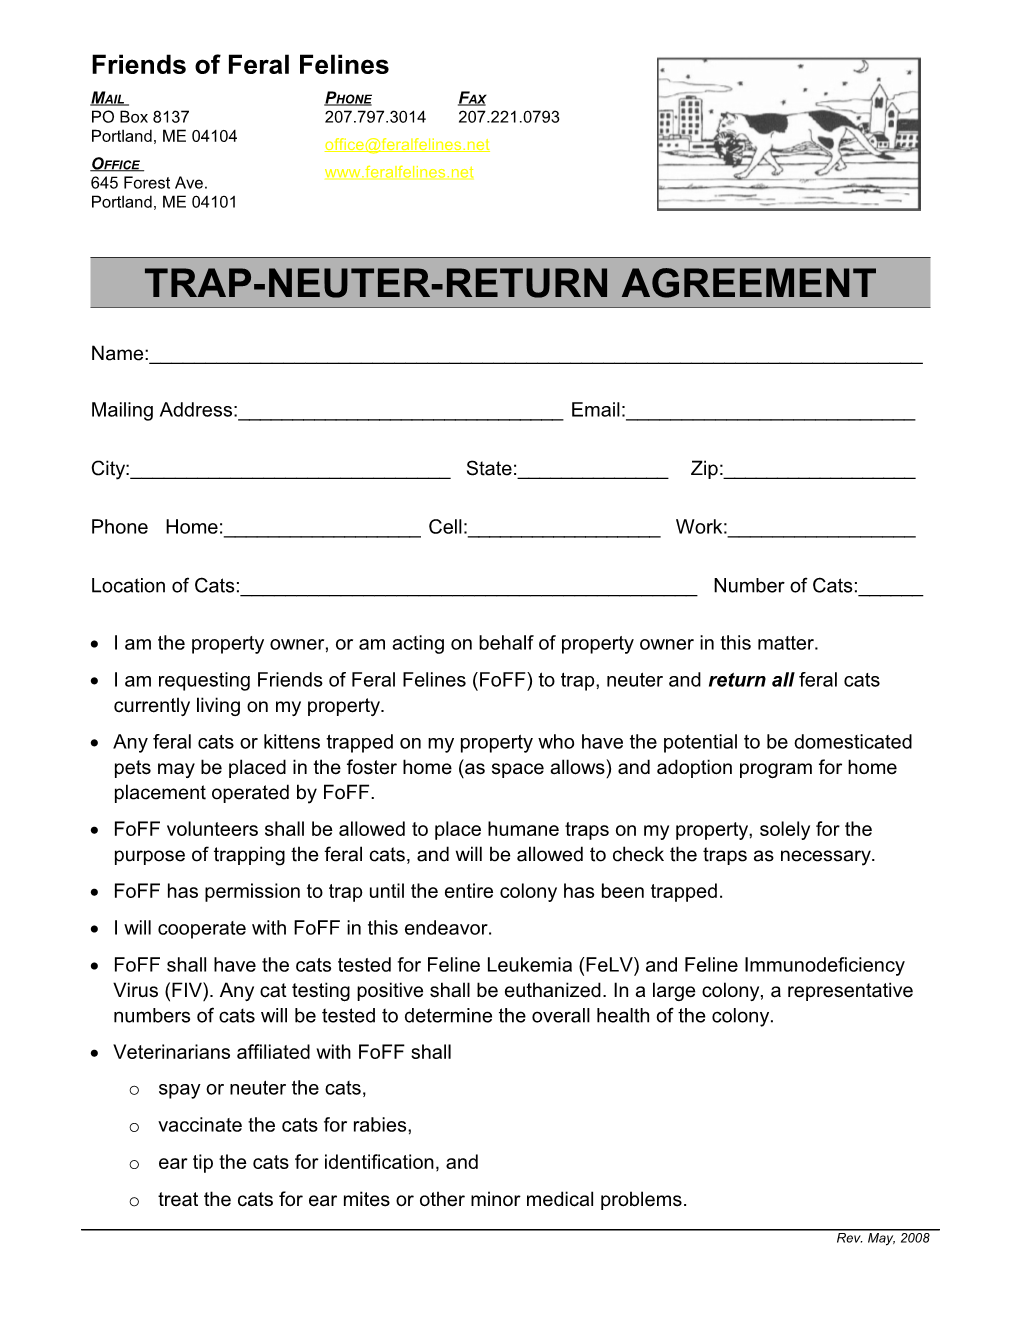 Friends of Feral Felines Trap-Neuter-Return Agreement Page 2